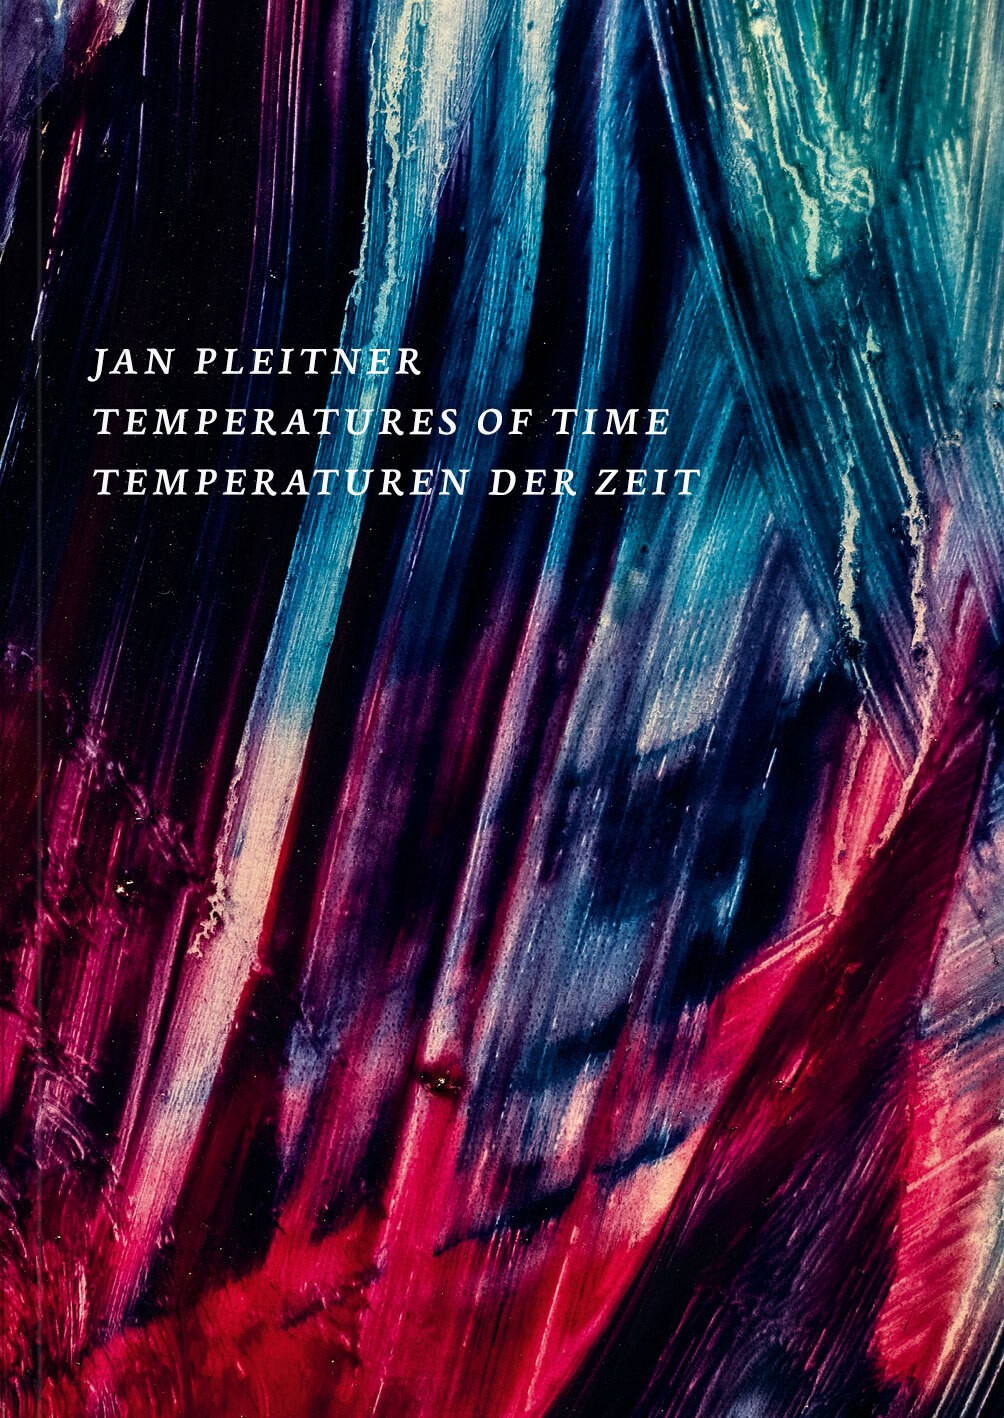 Jan Pleitner - temperatures of time - Exhibitions - Kerlin Gallery